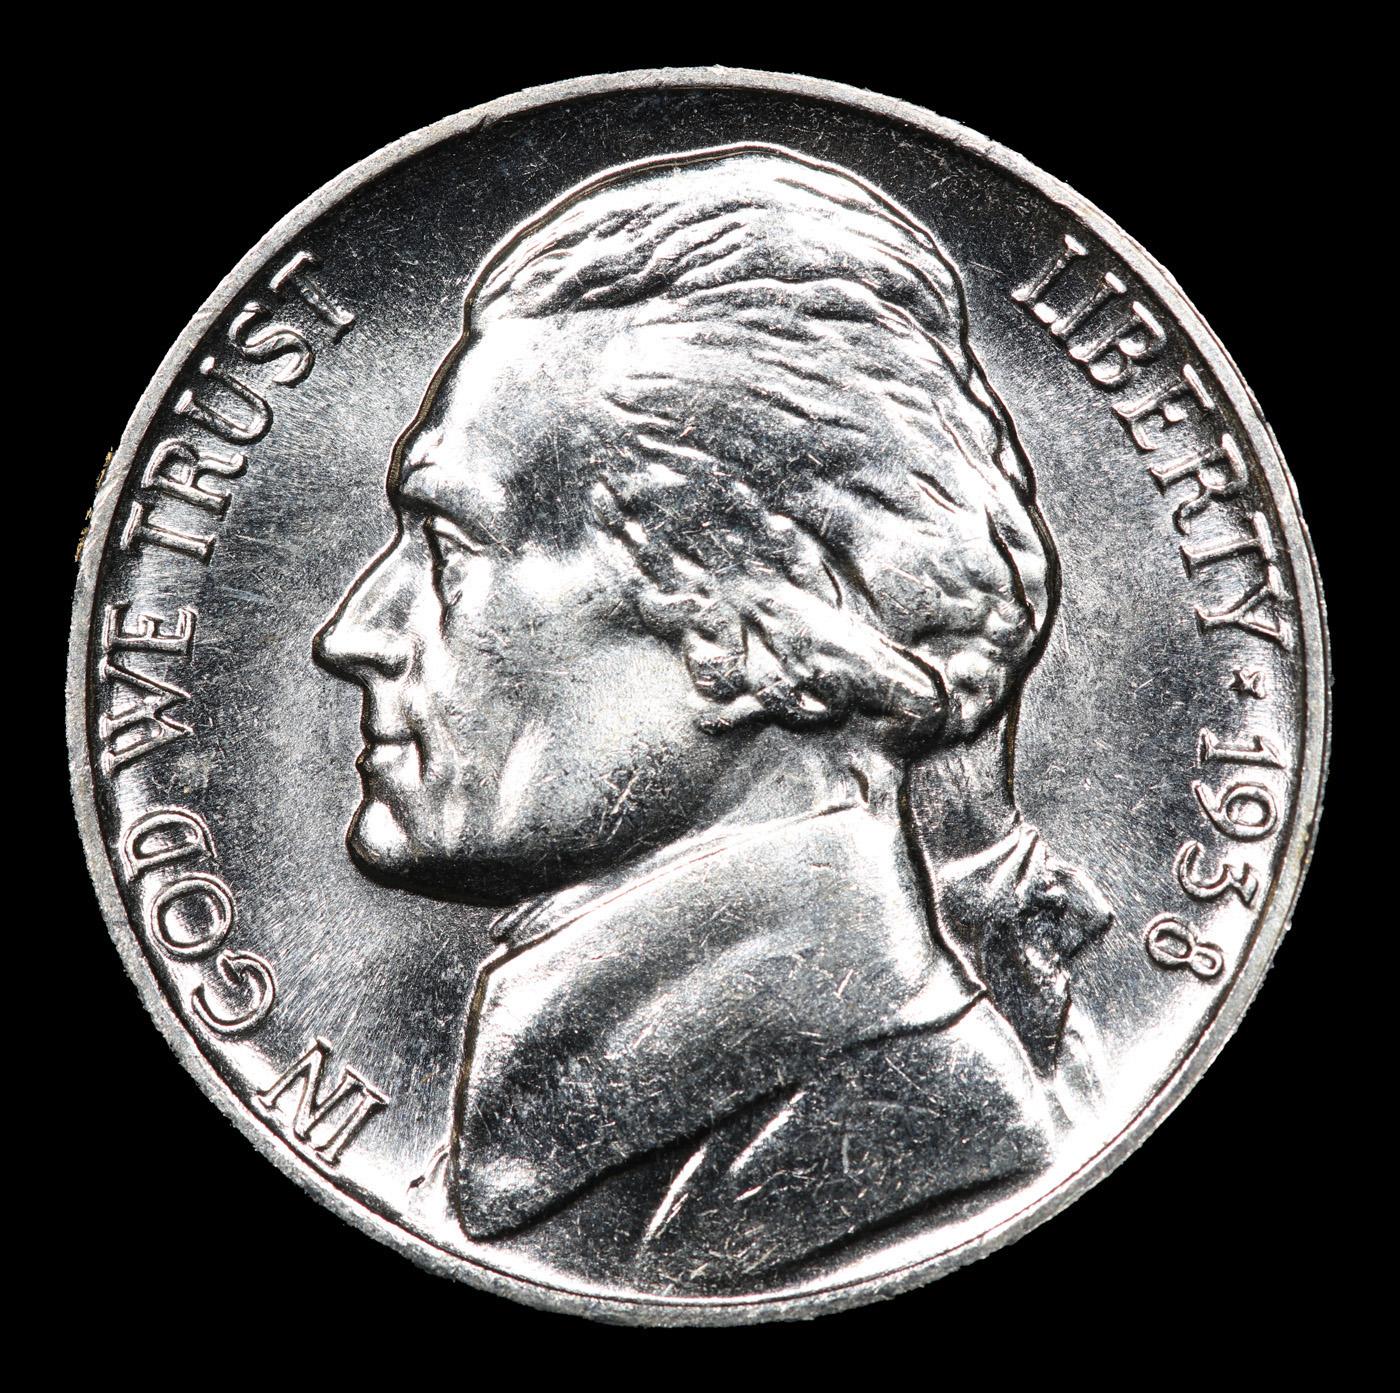 1938-p Jefferson Nickel 5c Grades GEM++ 5fs